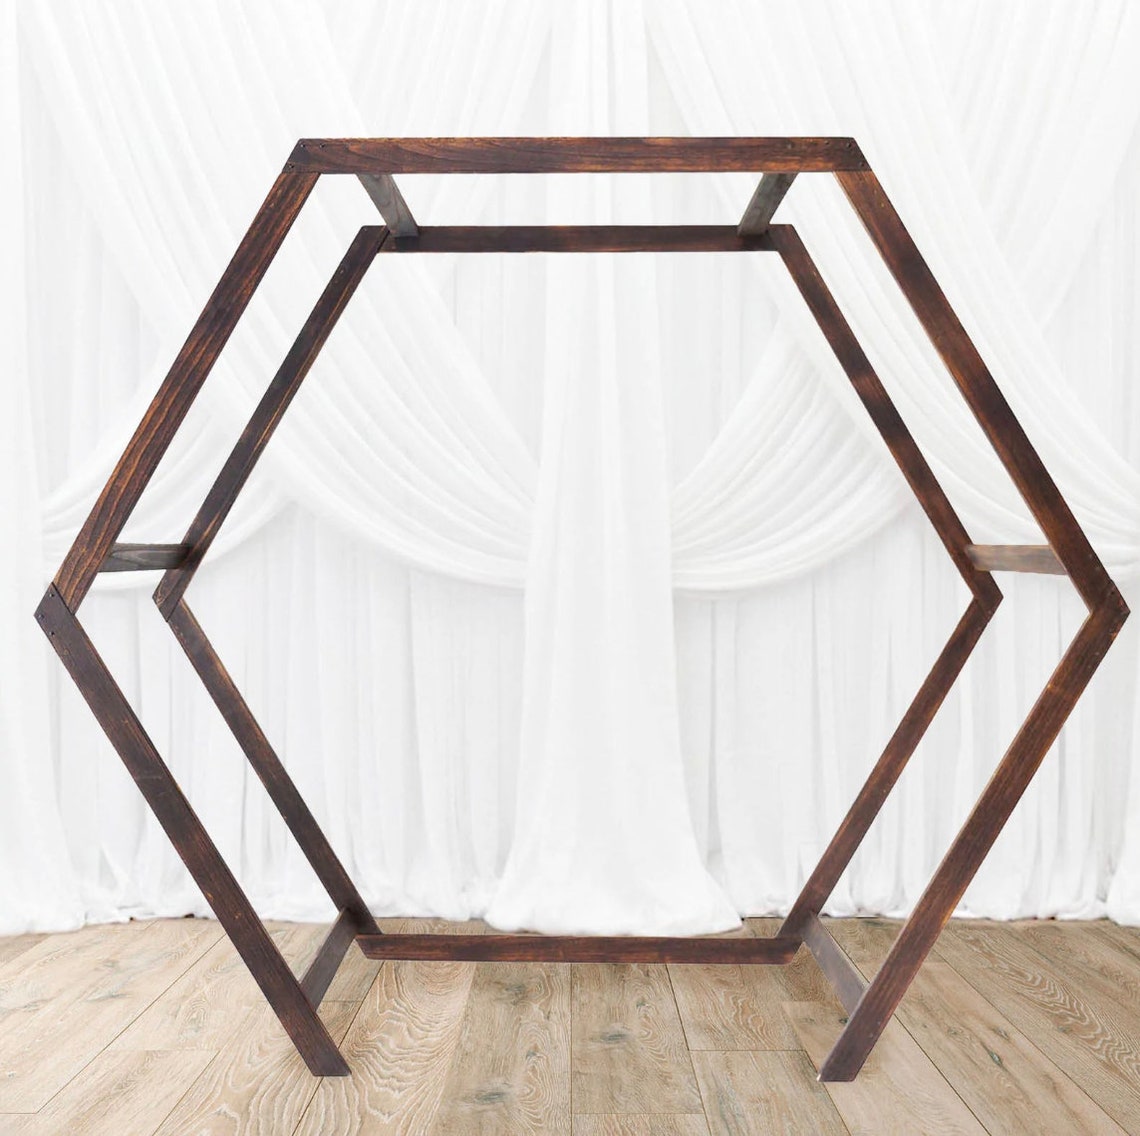 8.5 FT. Wooden Wedding Arch Backdrop Hexagon Brown DIY Rustic - Etsy